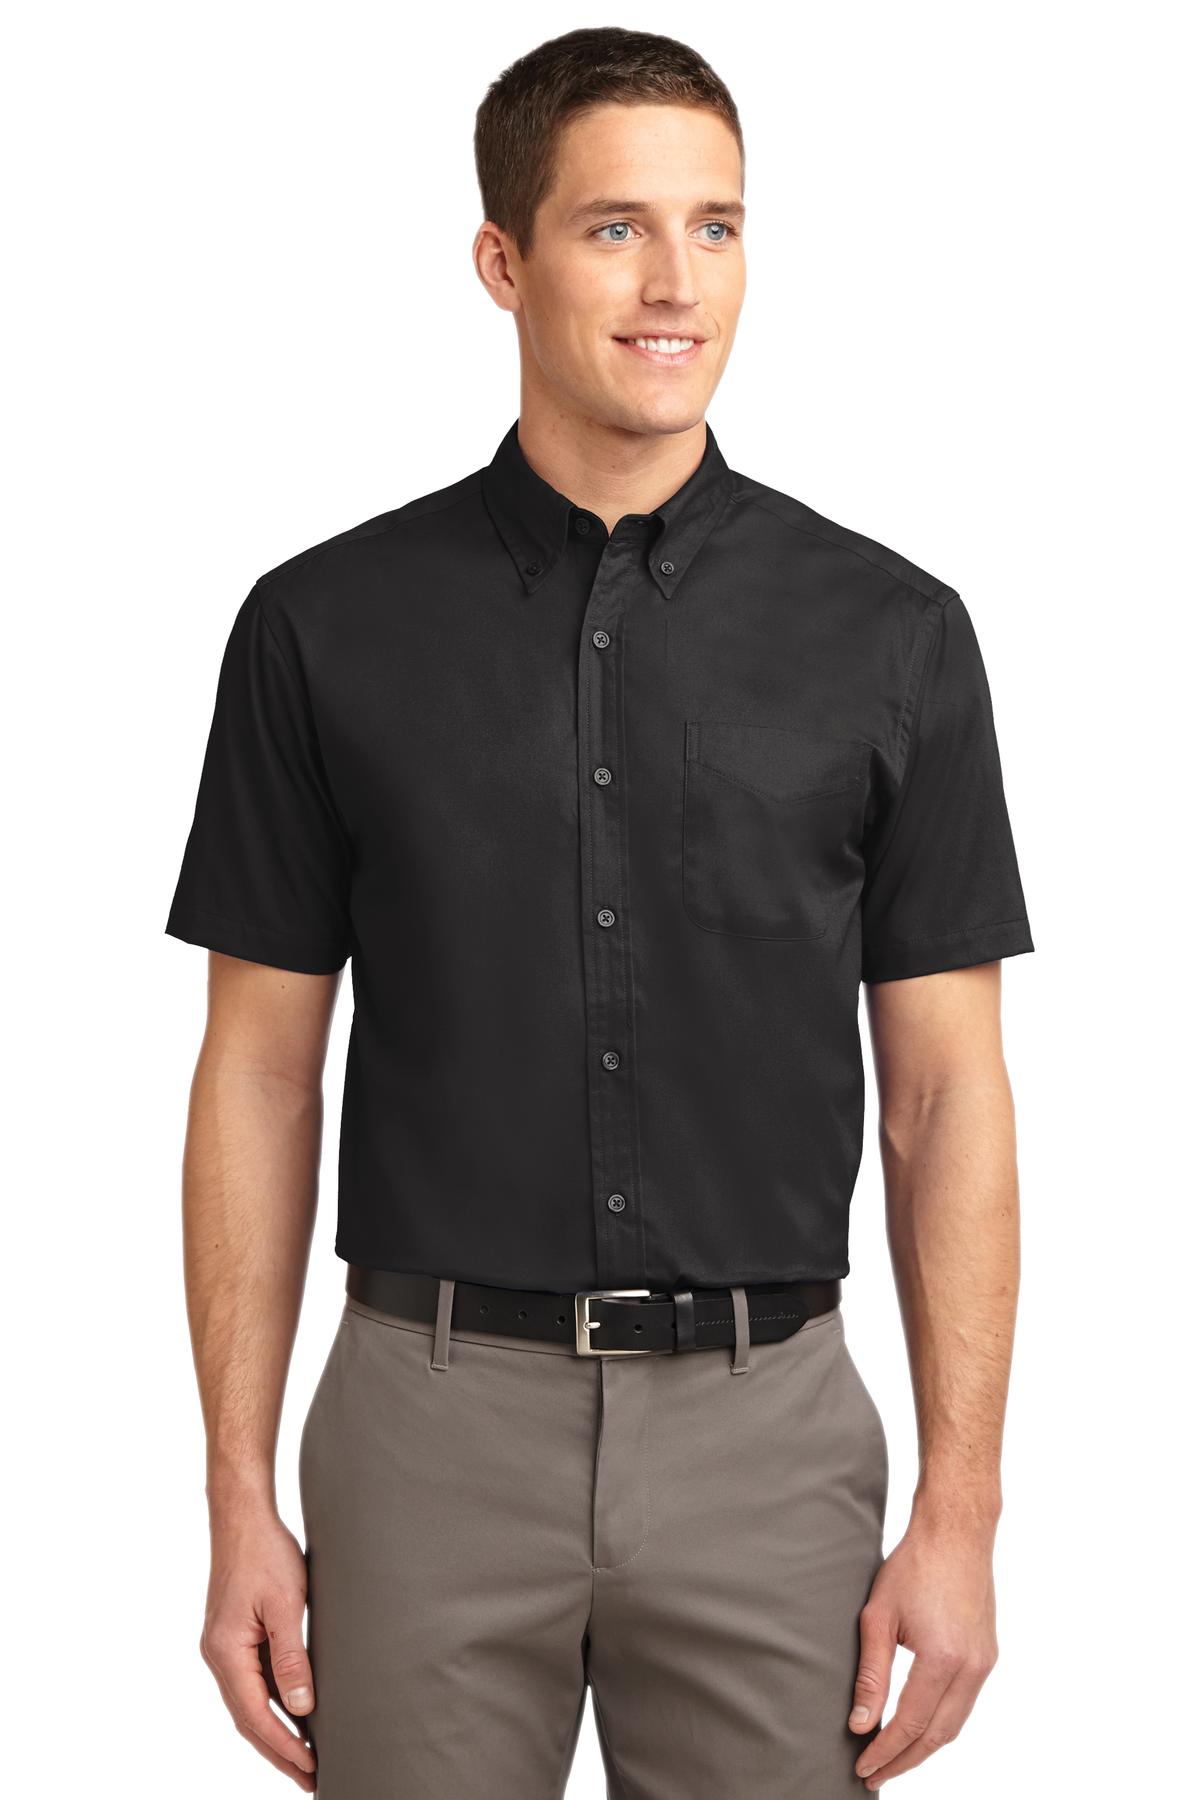 Port Authority Tall Short Sleeve Easy Care Shirt-